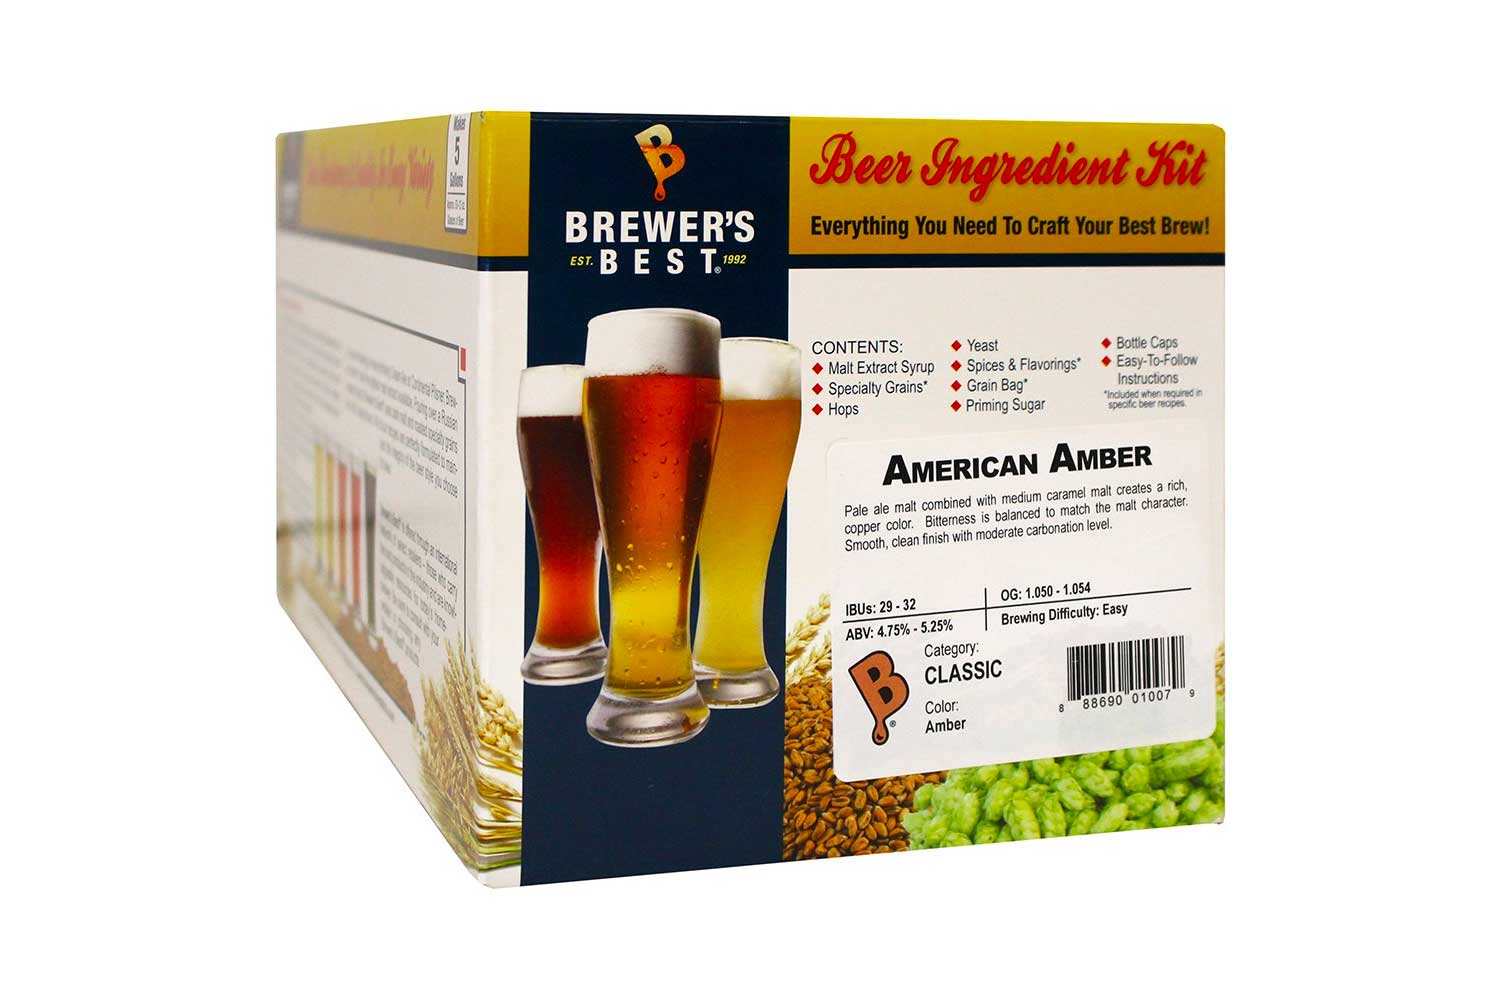 Brewer's Best - Home Brew Beer Ingredient Kit (5 gallon), (American Amber)